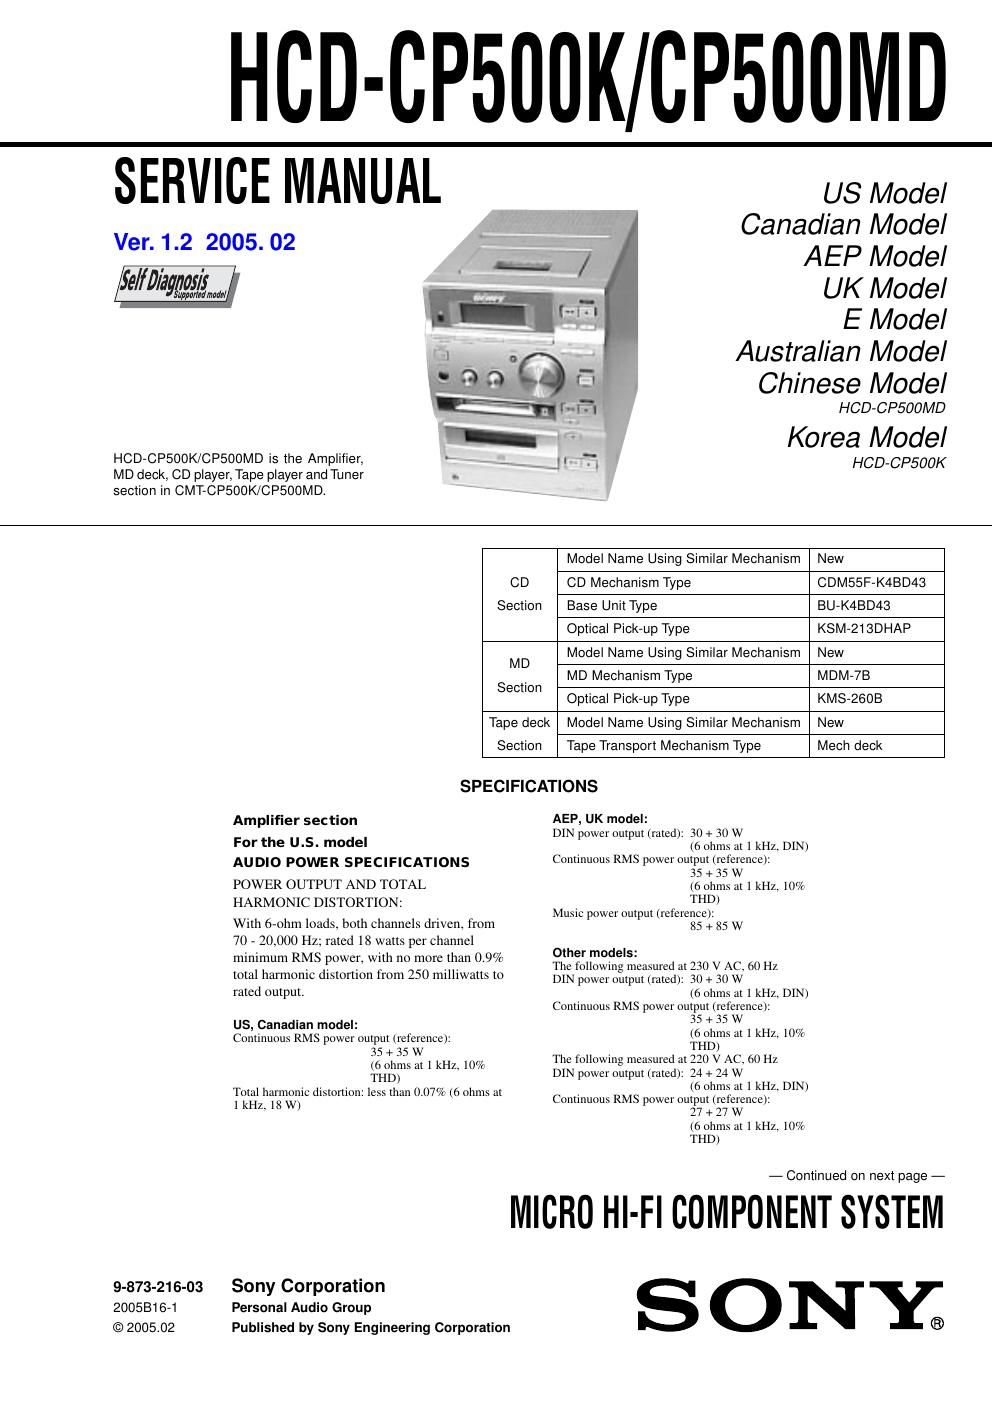 sony hcd cp 500 md service manual